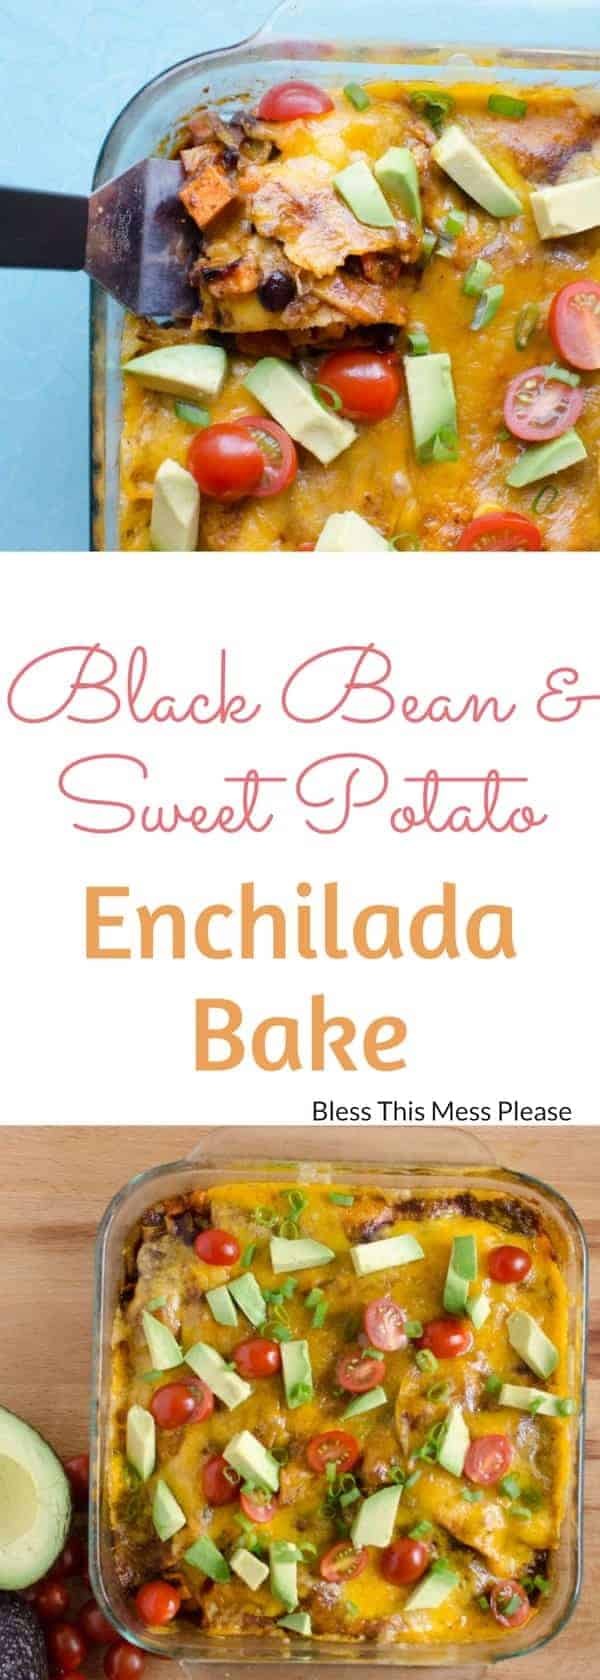 Enchilada Bake